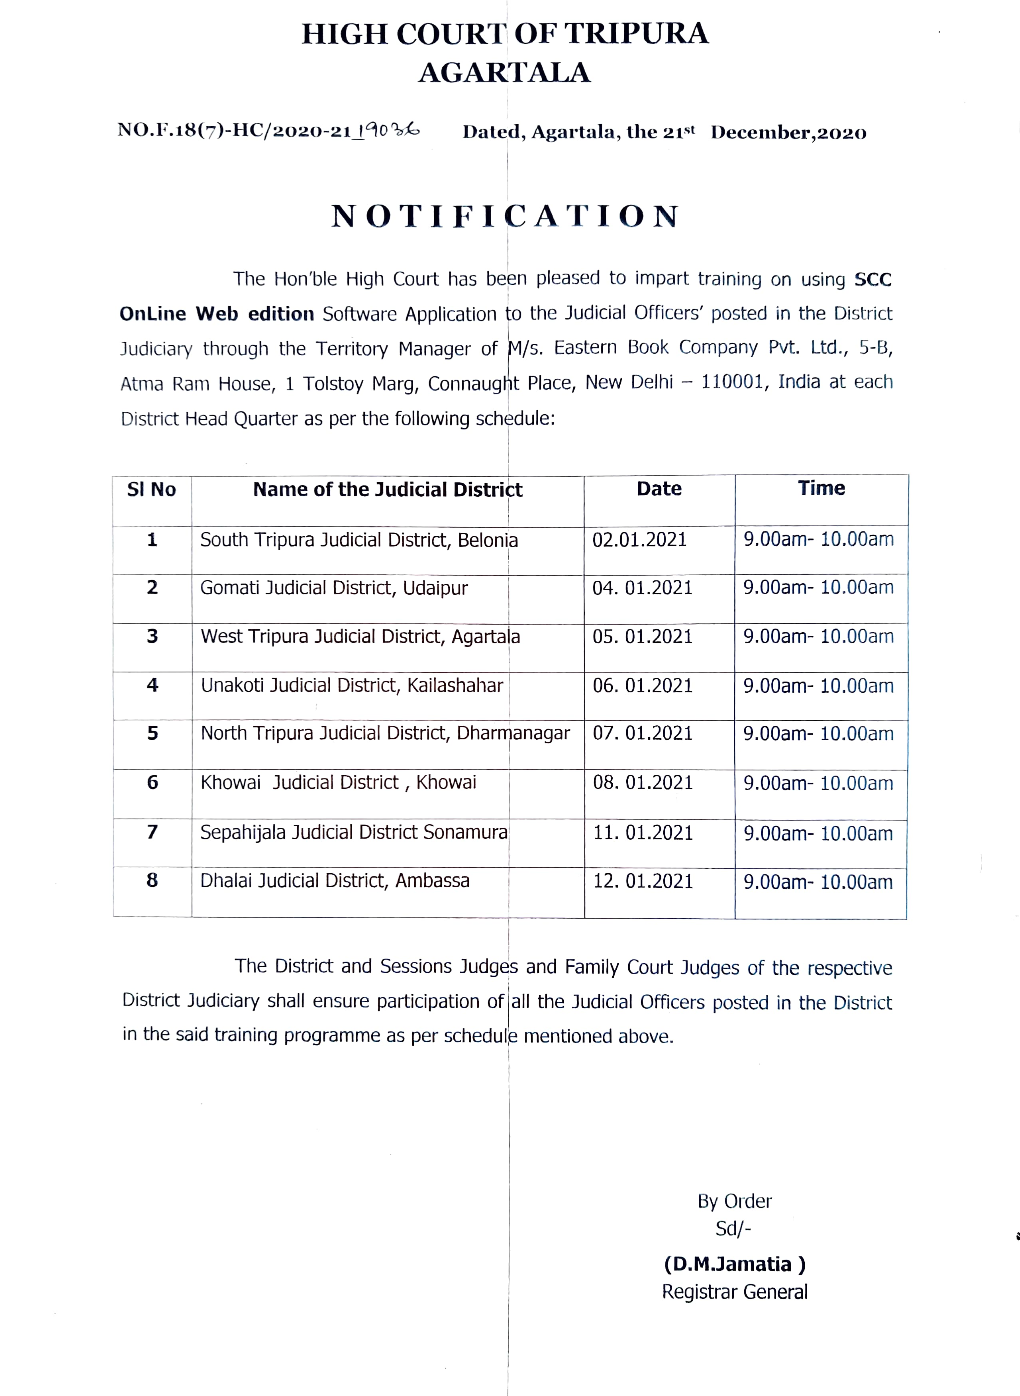 NOTIFICATION Unakoti Judicial District, Kailashahar